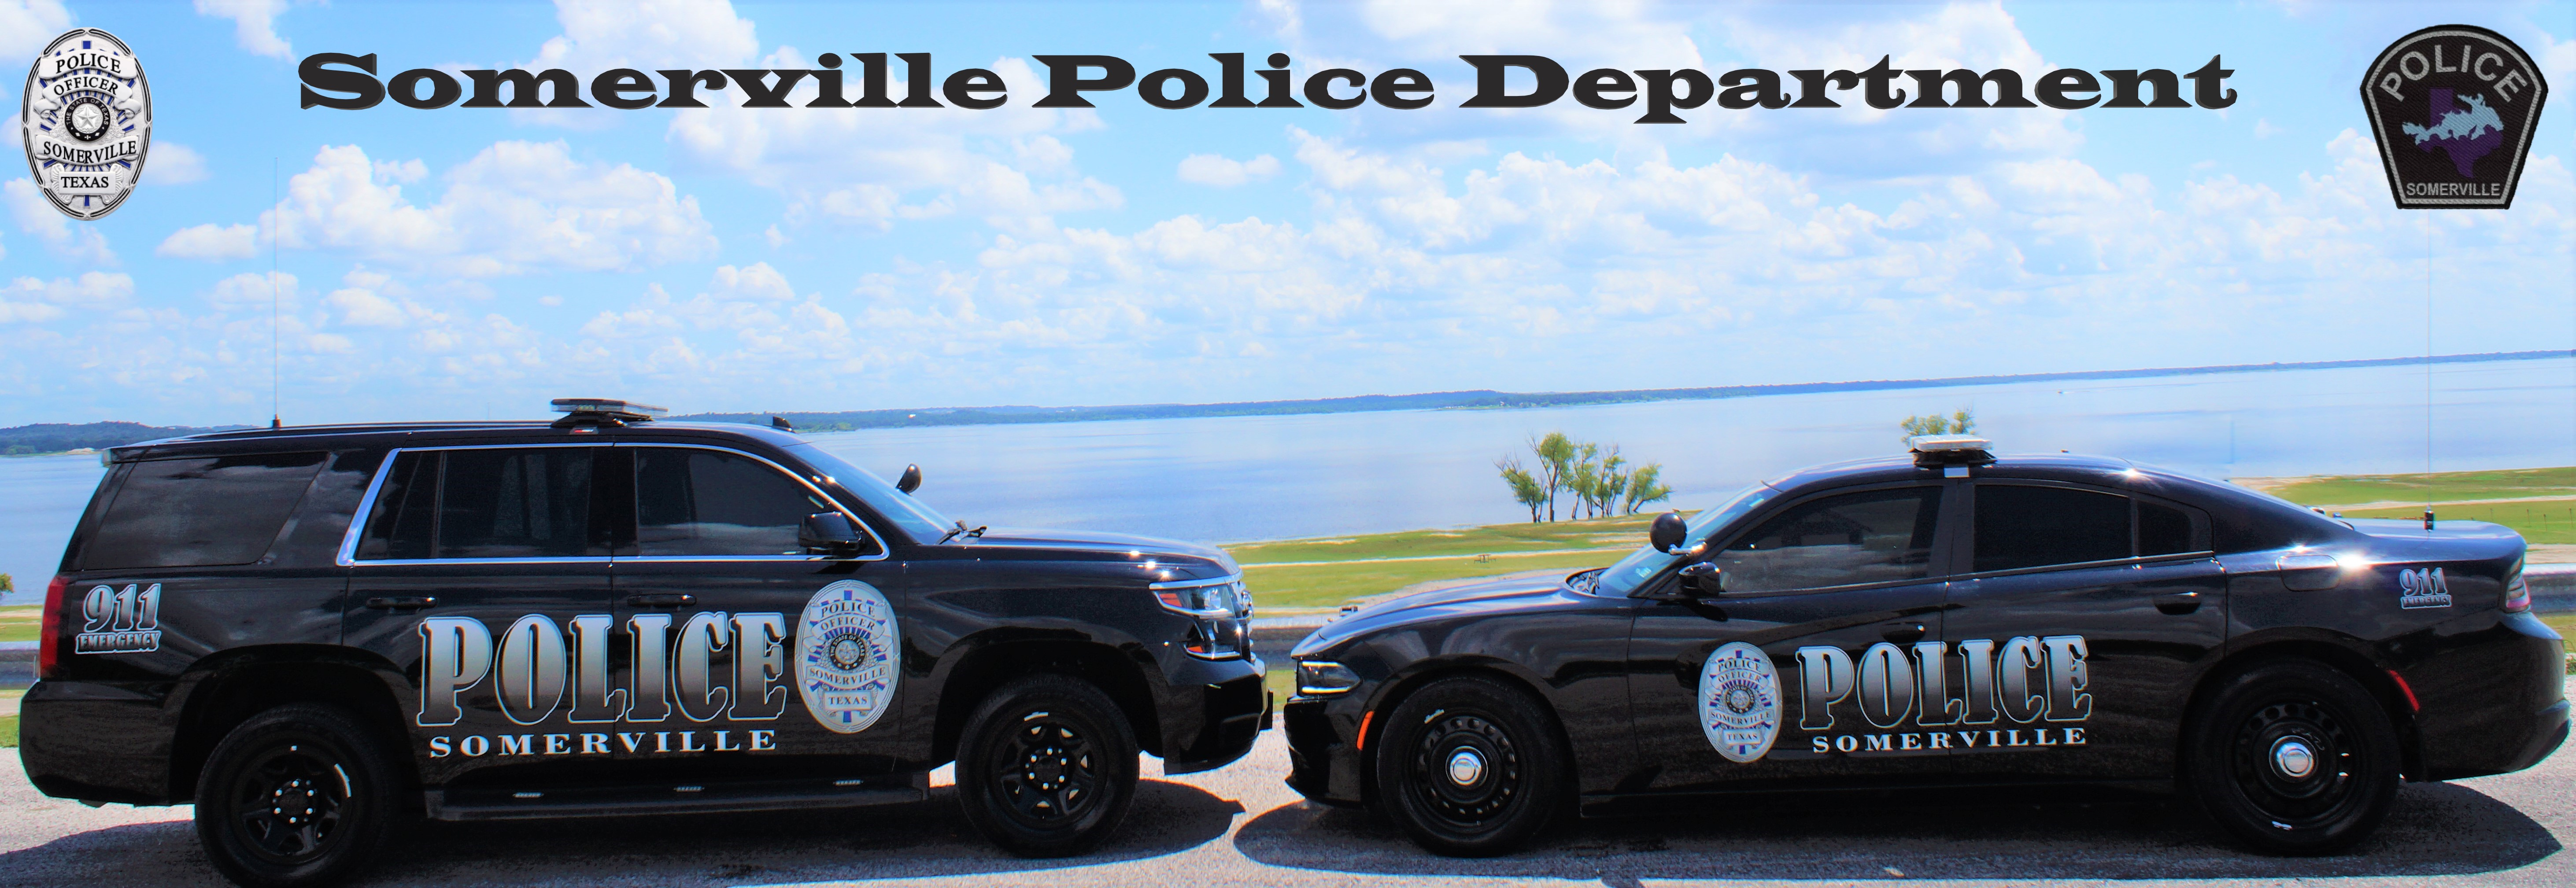 Somerville Police Department, TX Police Jobs